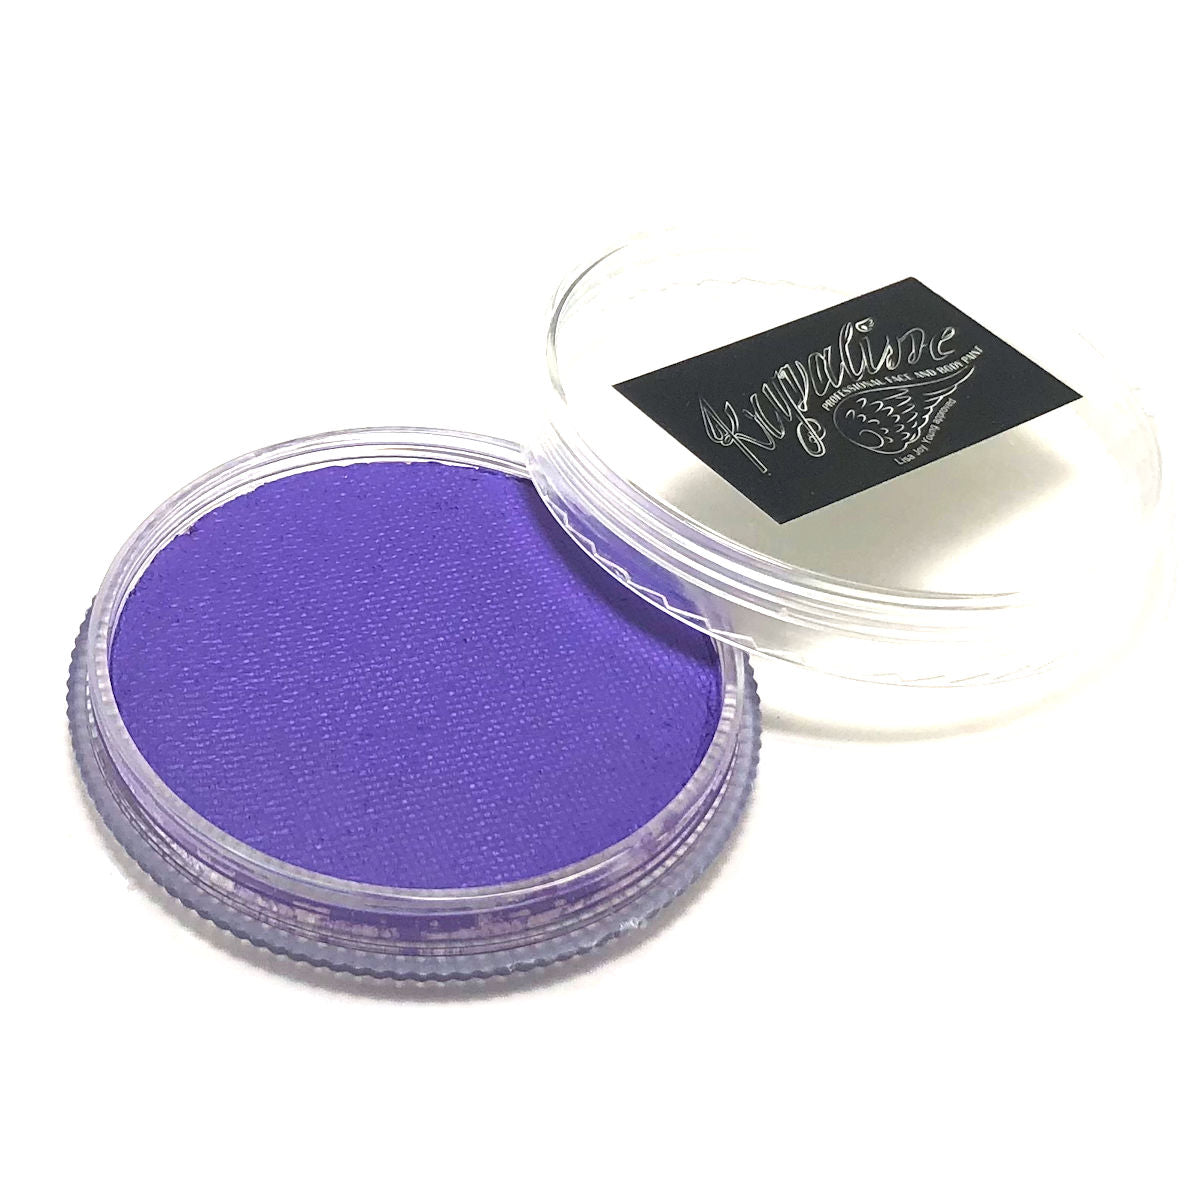 Creamy Matte Colors 30g Light Purple - Kryvaline Body Art Makeup | Glitter Tattoos, Face & Body Paint, Design - Kryvaline Body Art Makeup